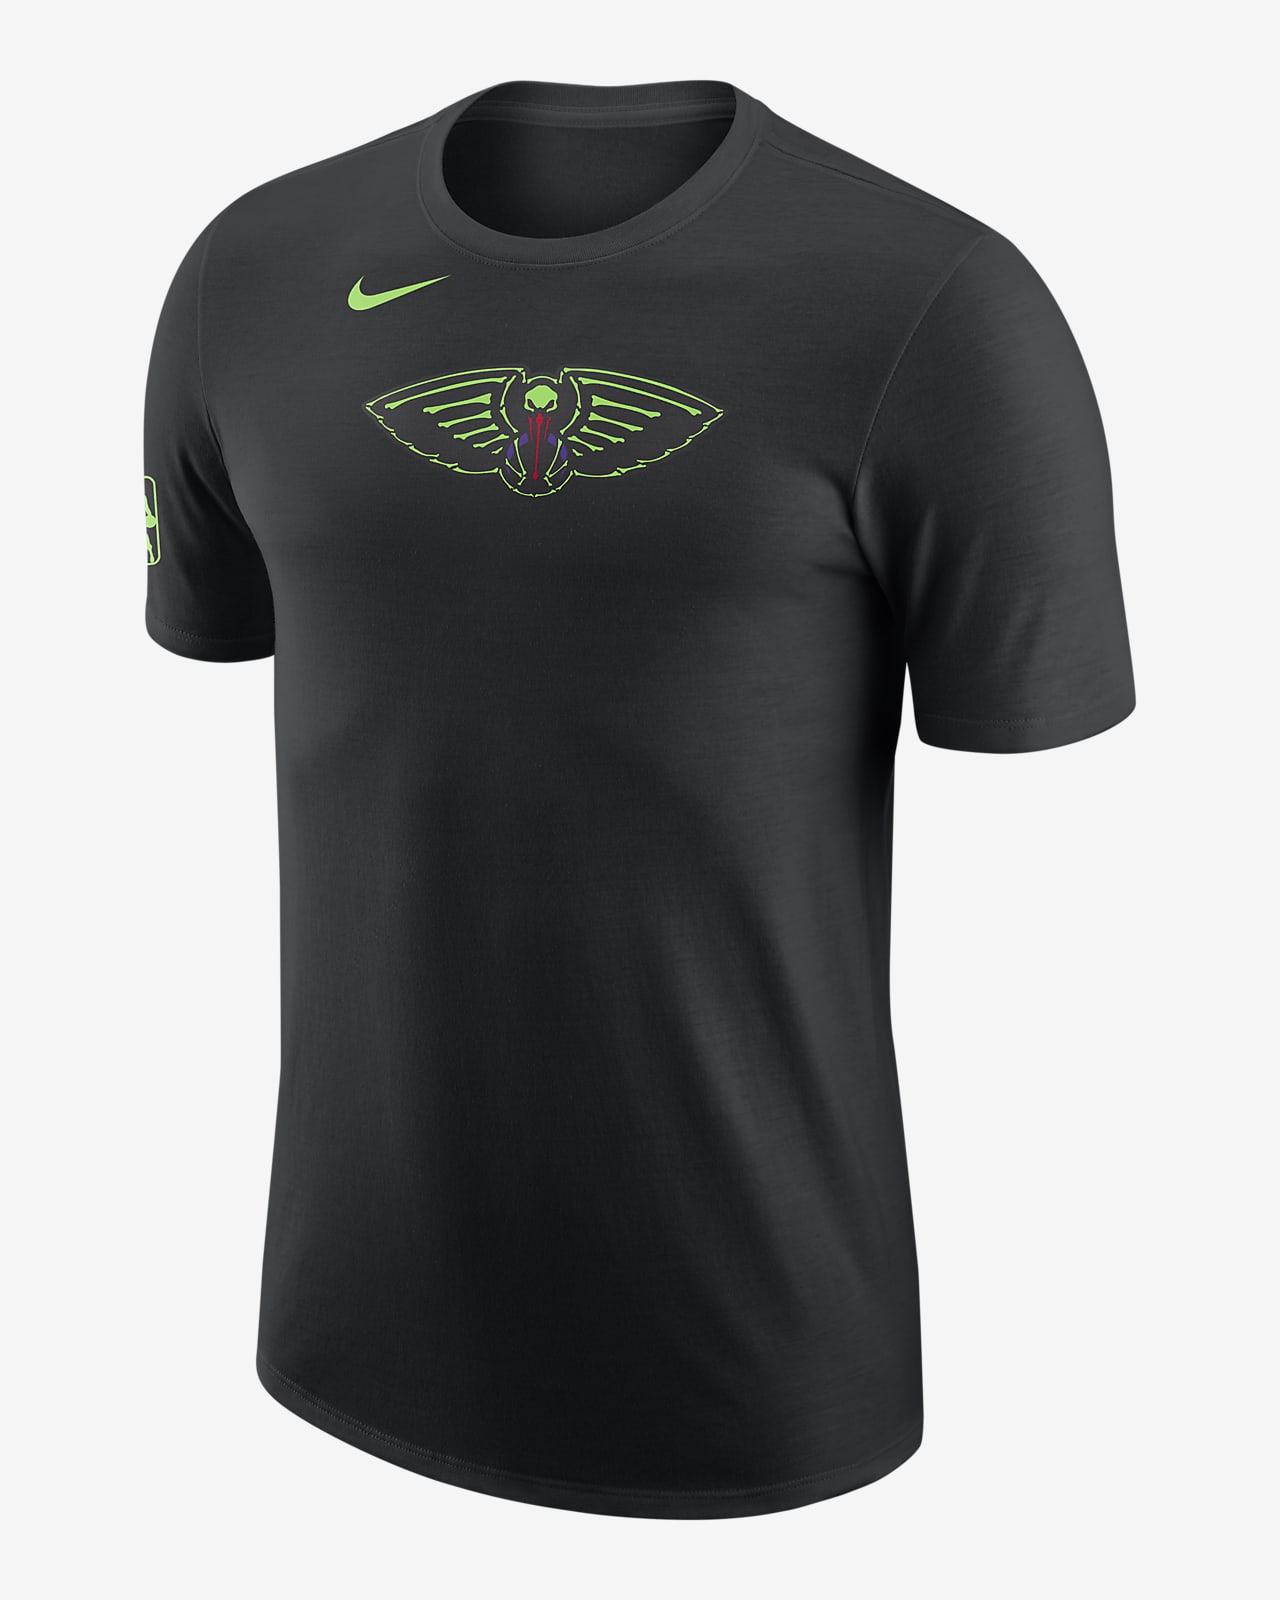 New Orleans Pelicans City Edition Men's Nike NBA T-Shirt